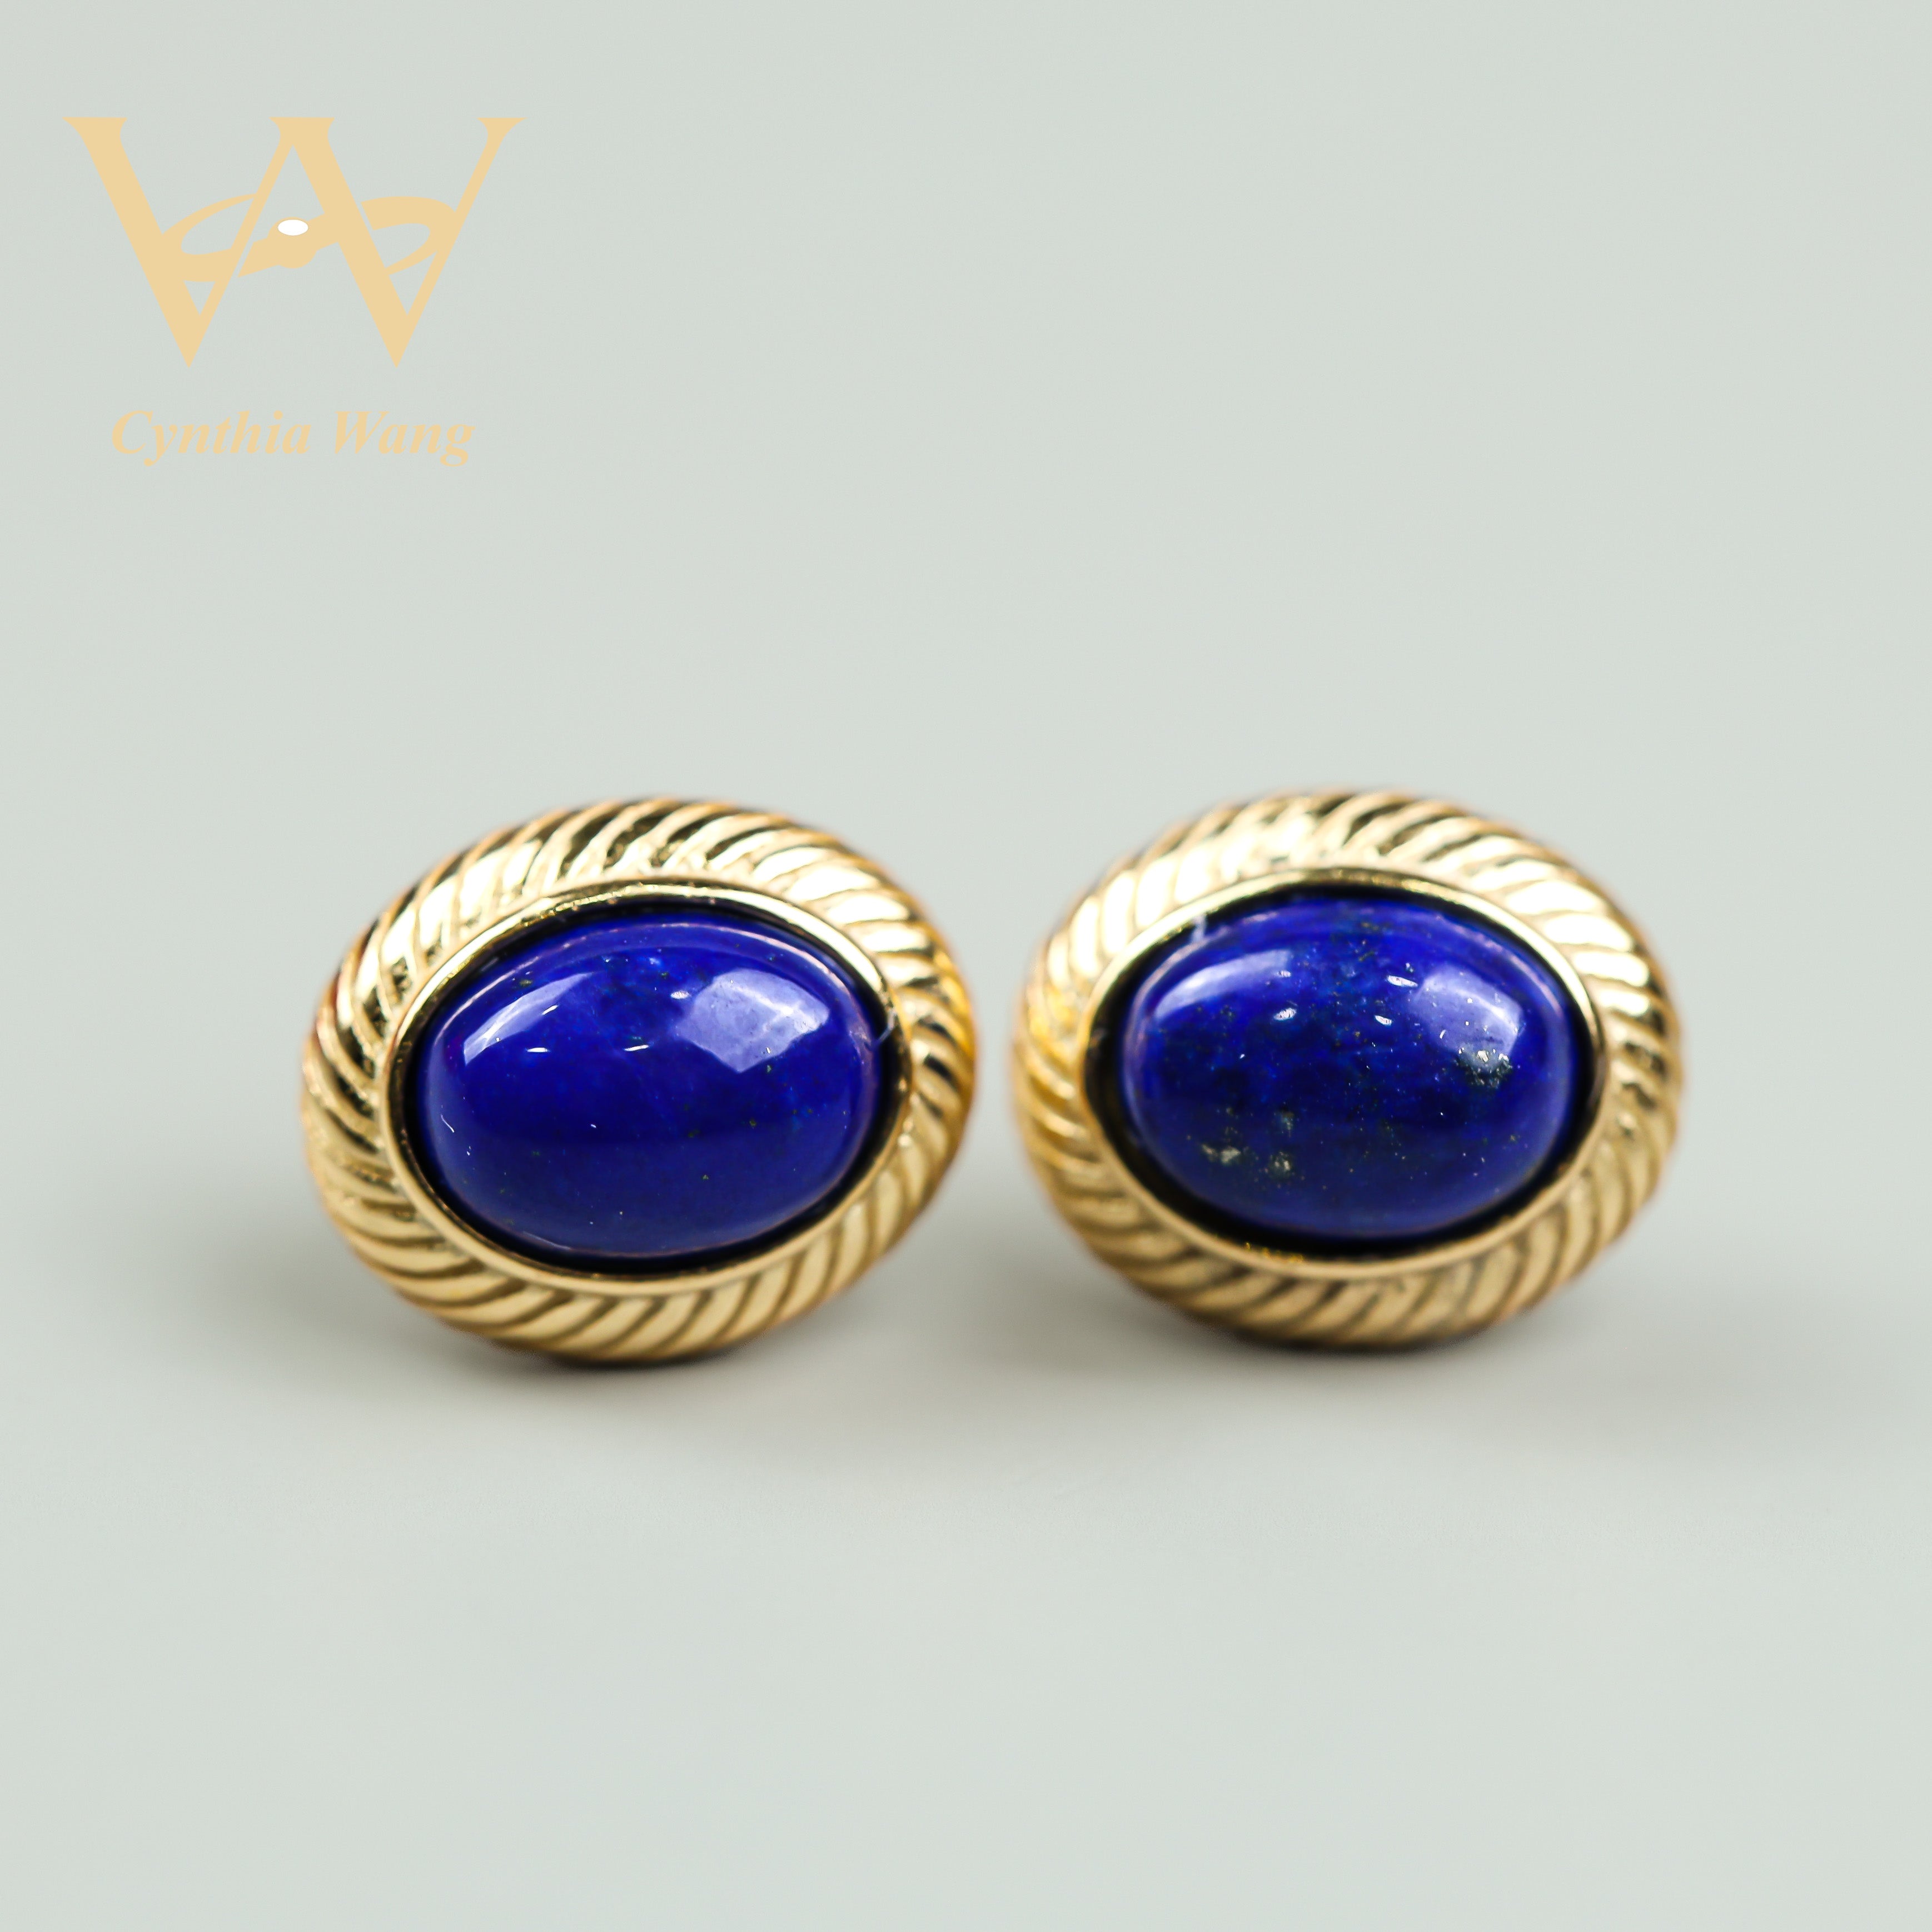 'Arctic Blue' Lapis Lazuli Earrings